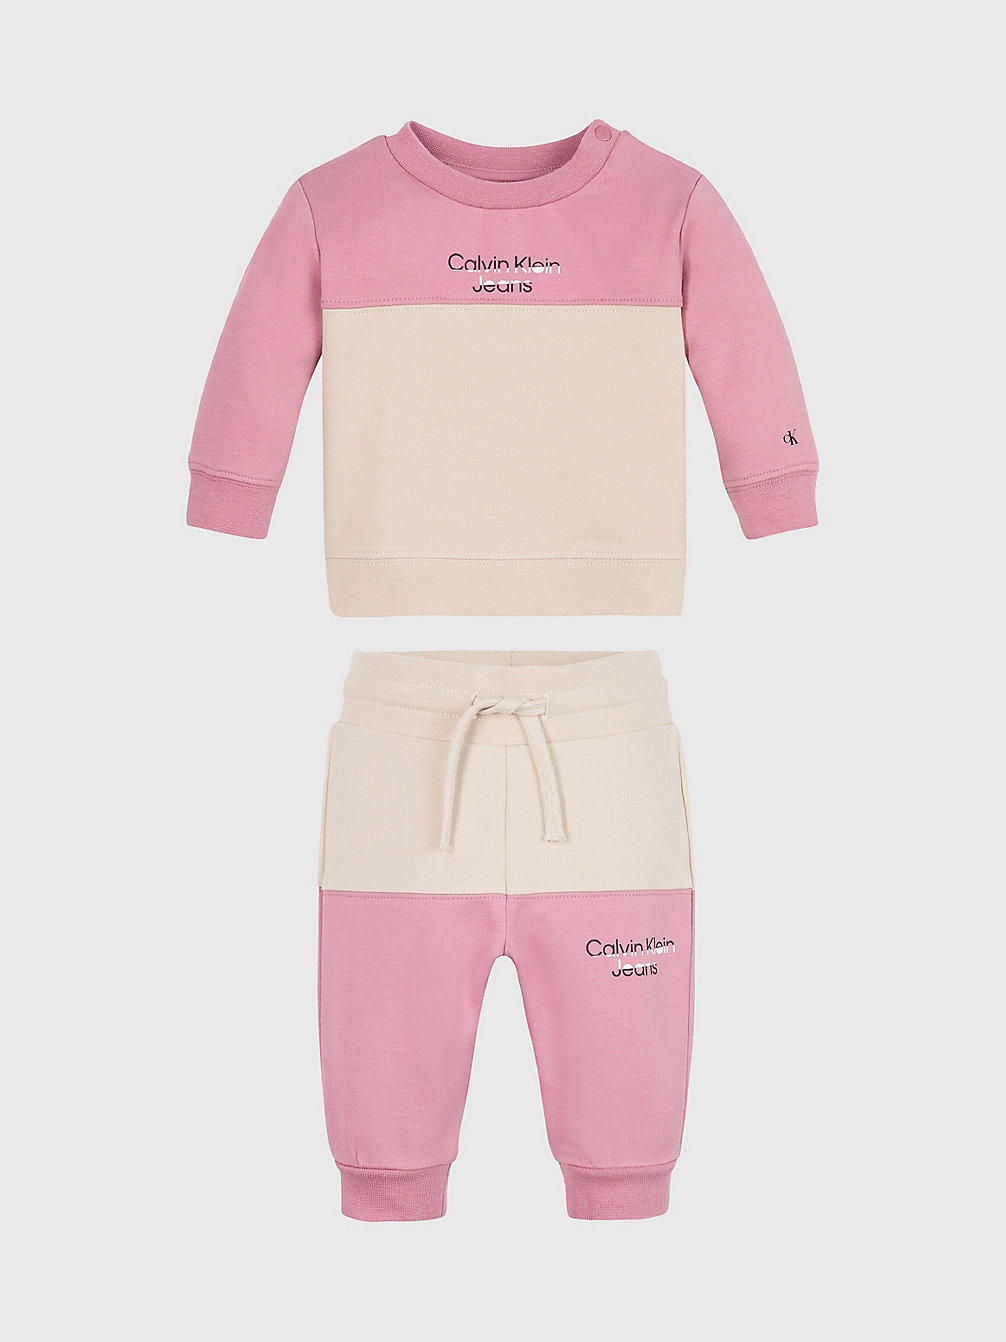 FOXGLOVE Newborn Colourblock Tracksuit undefined newborn Calvin Klein